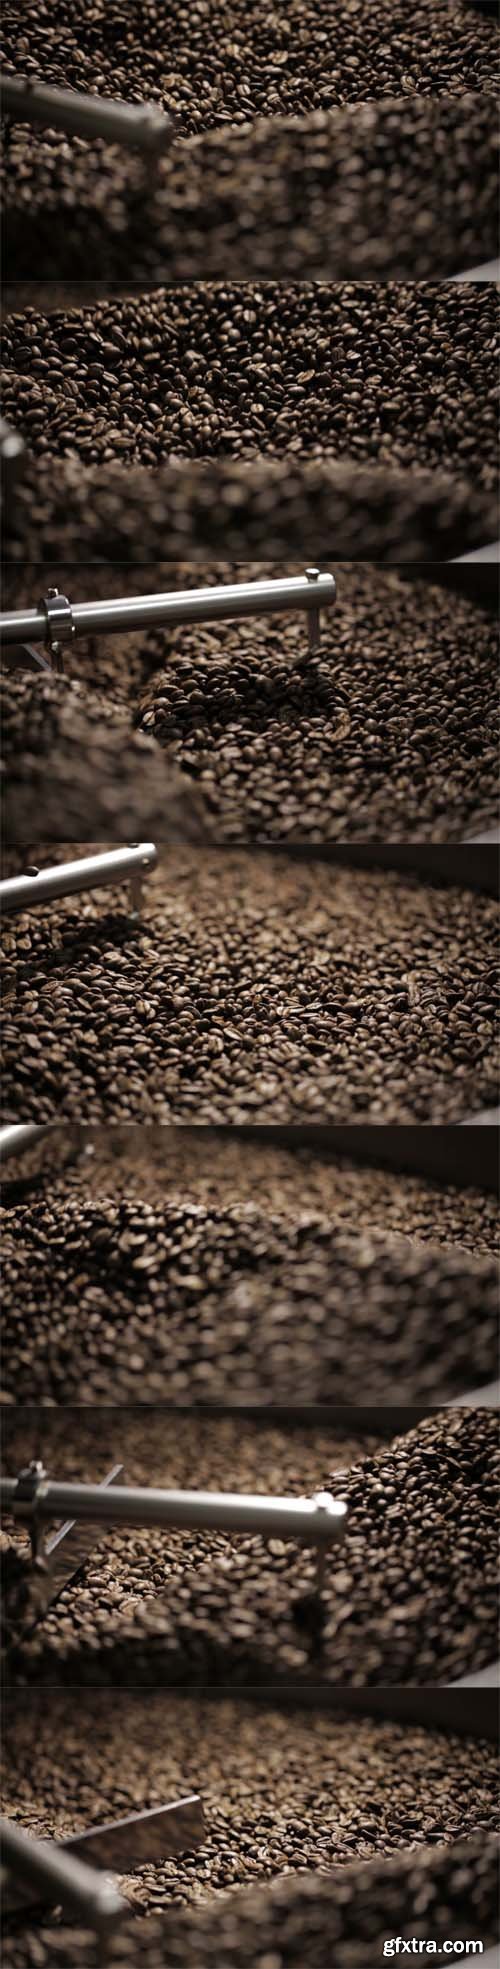 MA - Roasted Coffee Beans